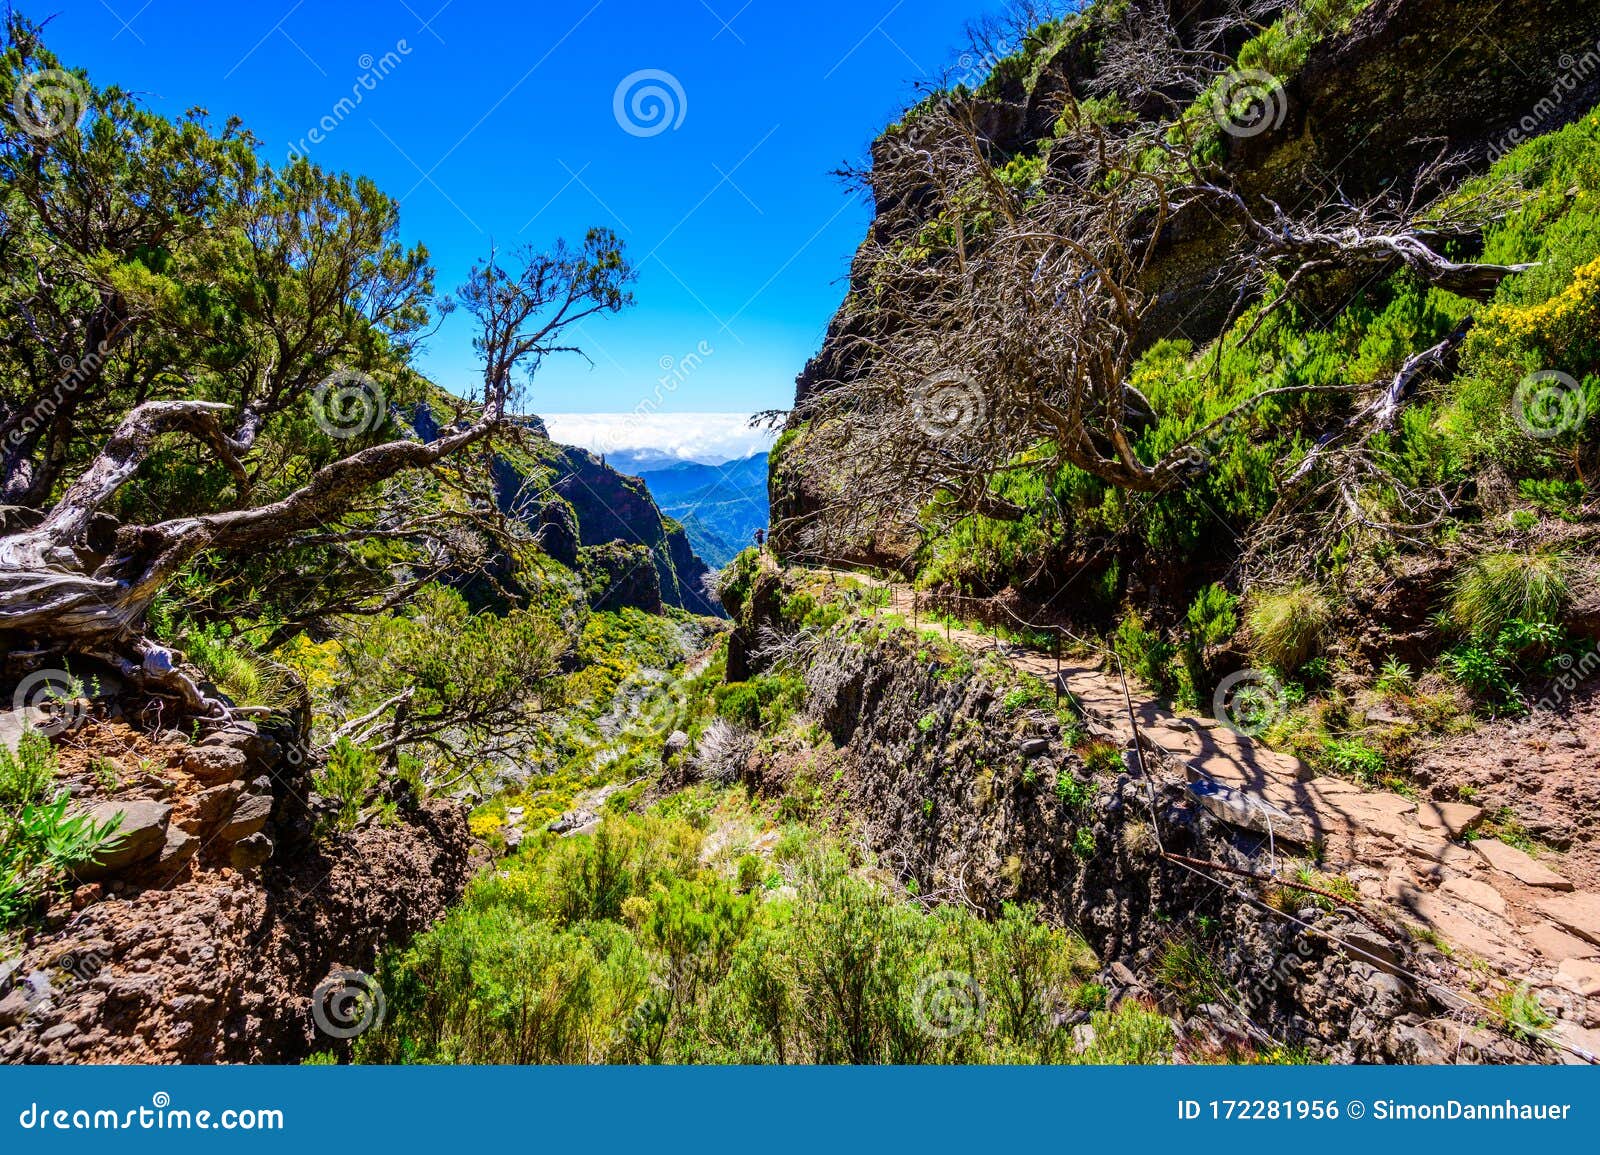 beautiful hiking trail from pico do arieiro to pico ruivo, madeira island. footpath pr1 - vereda do areeiro. on sunny summer day